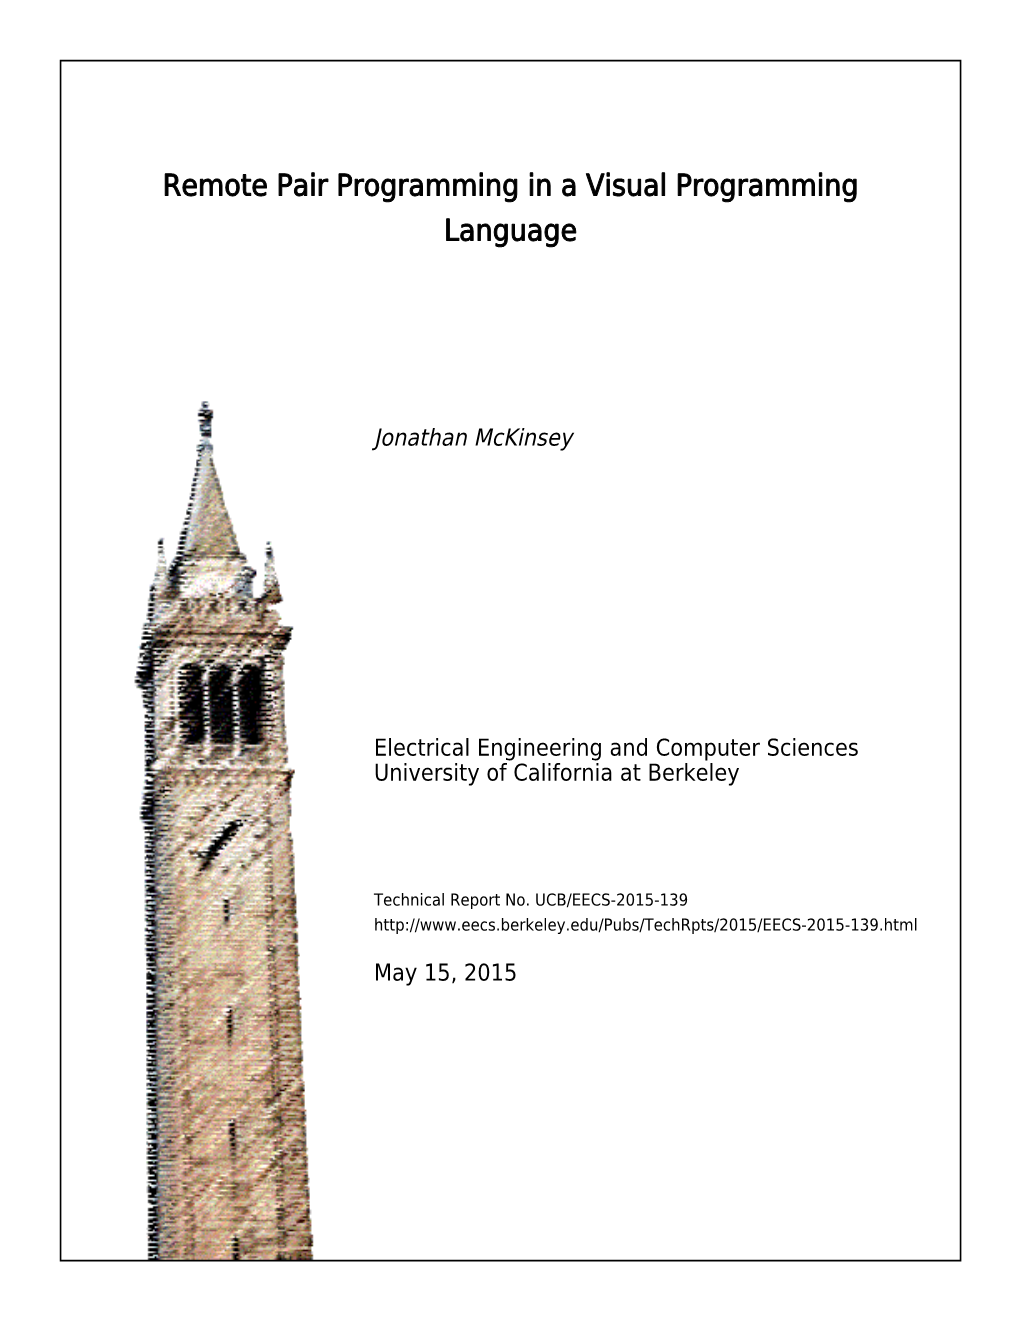 Remote Pair Programming in a Visual Programming Language